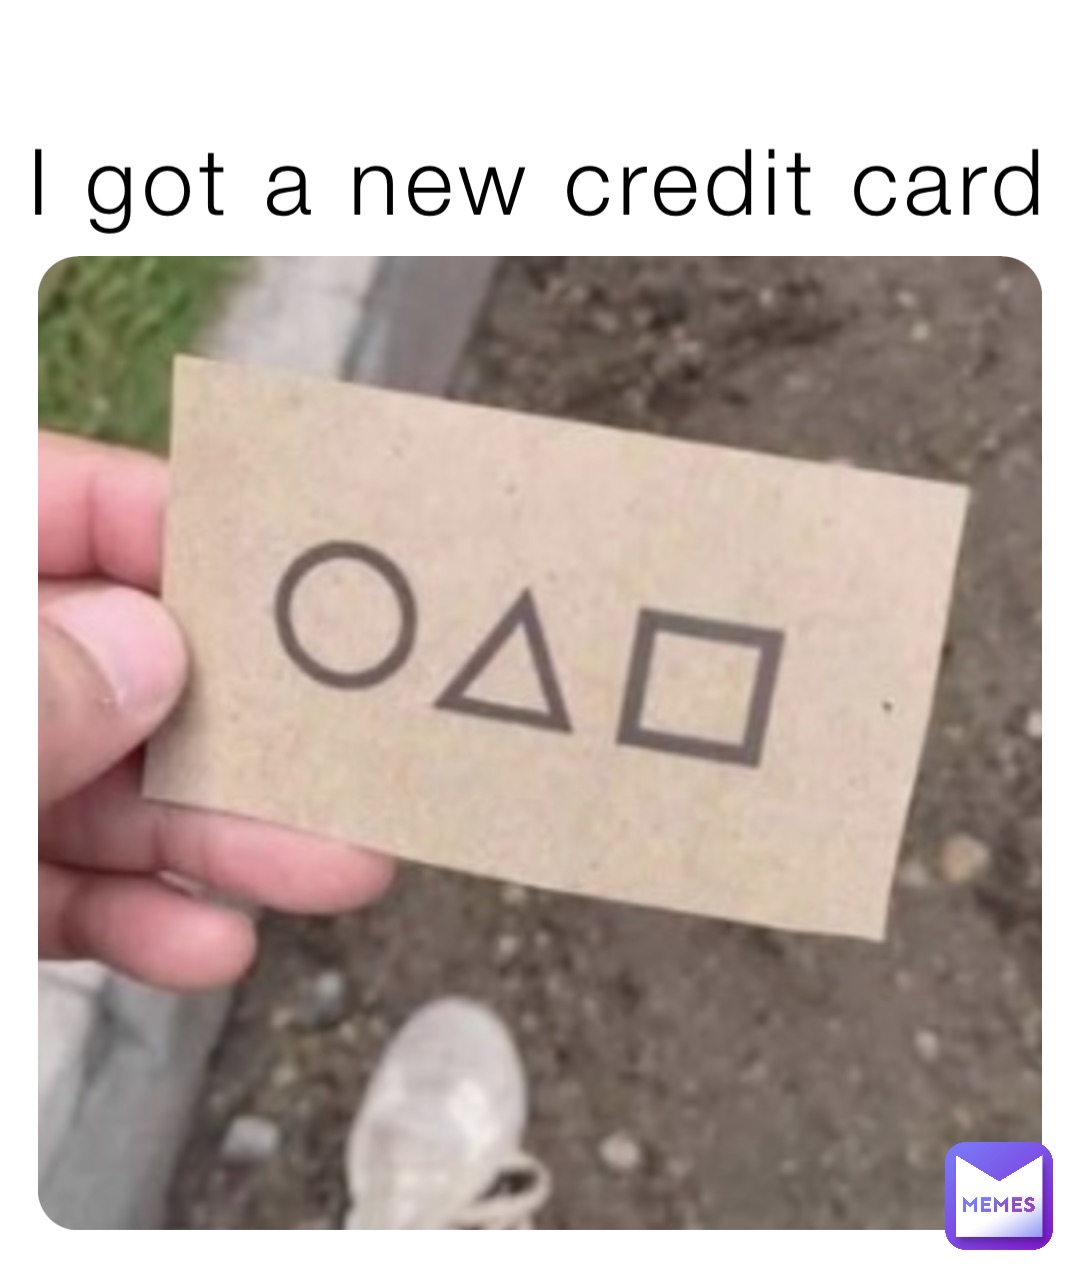 I got a new credit card guys!